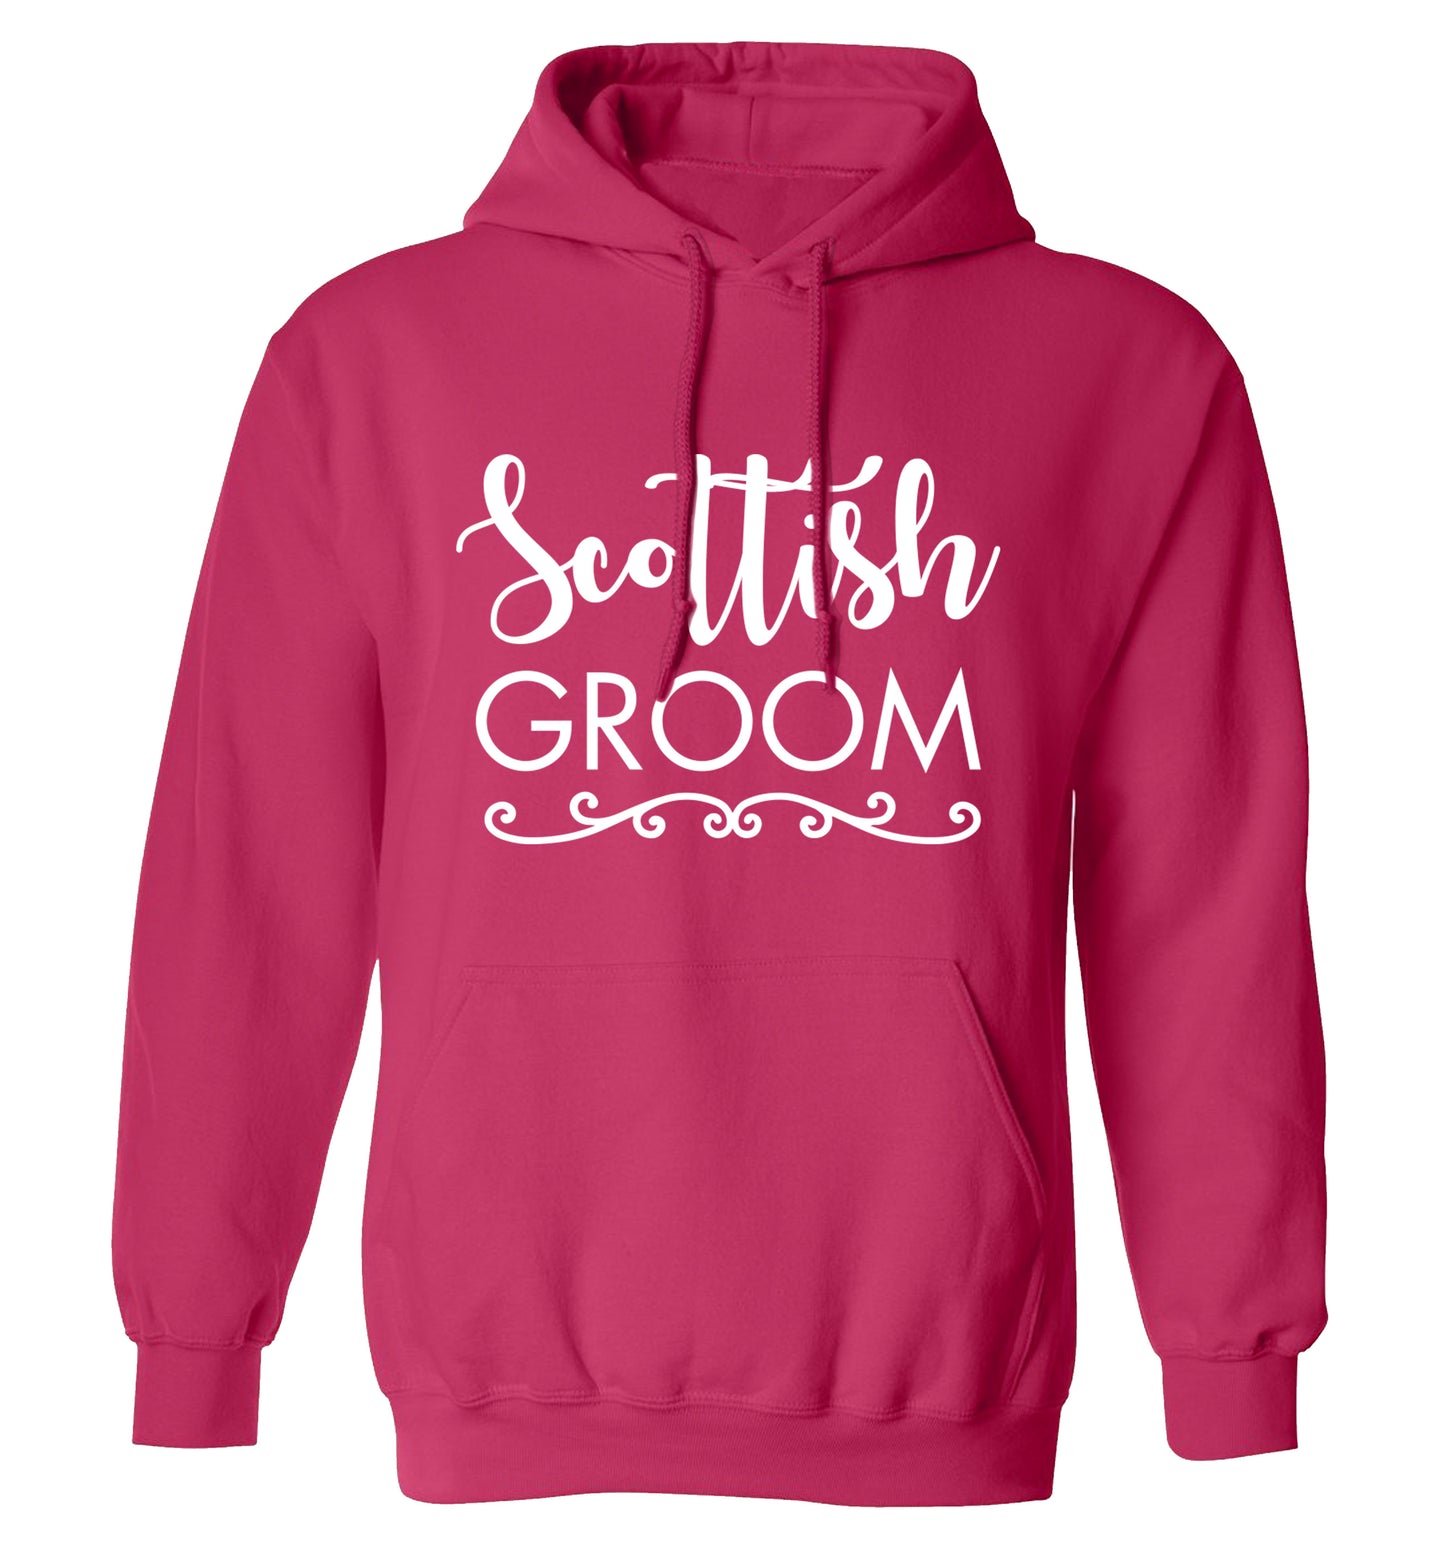 Scottish groom adults unisex pink hoodie 2XL